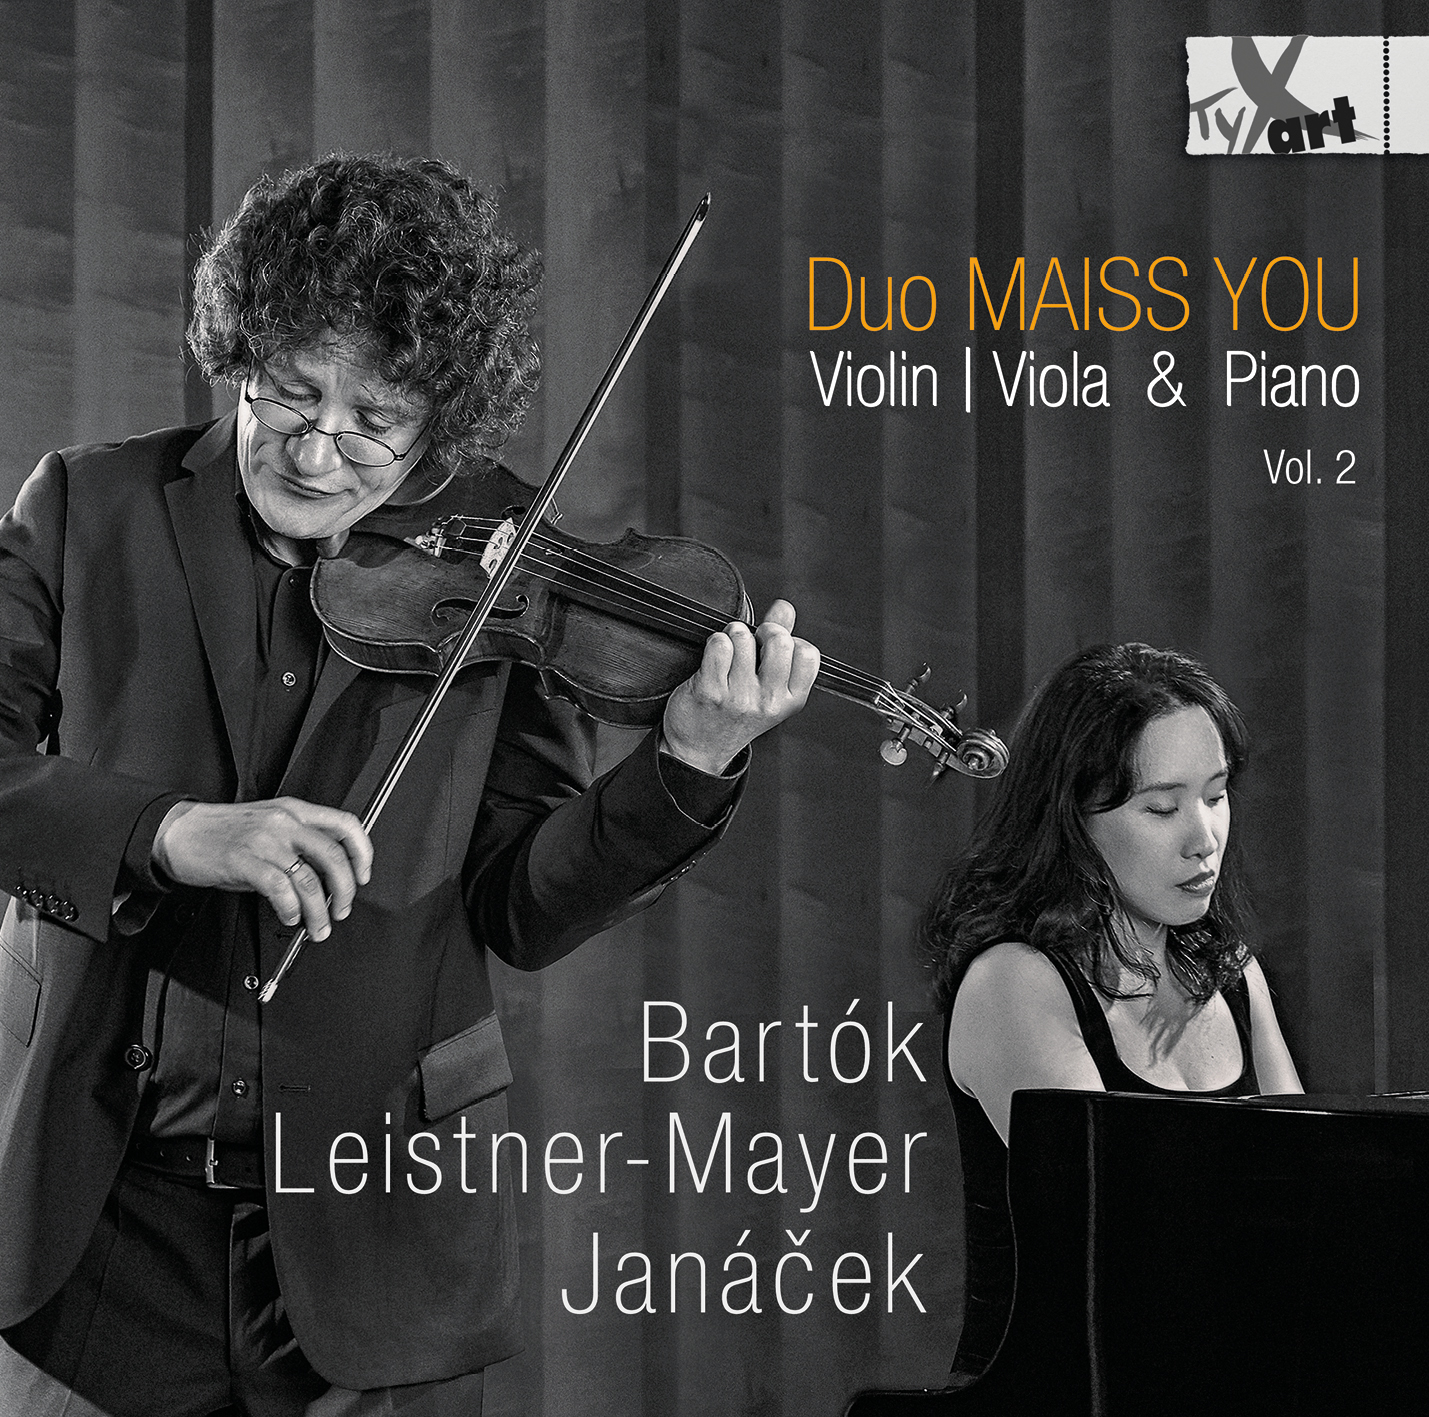 Duo MAISS YOU - Bartok Leistner-Mayer Janacek